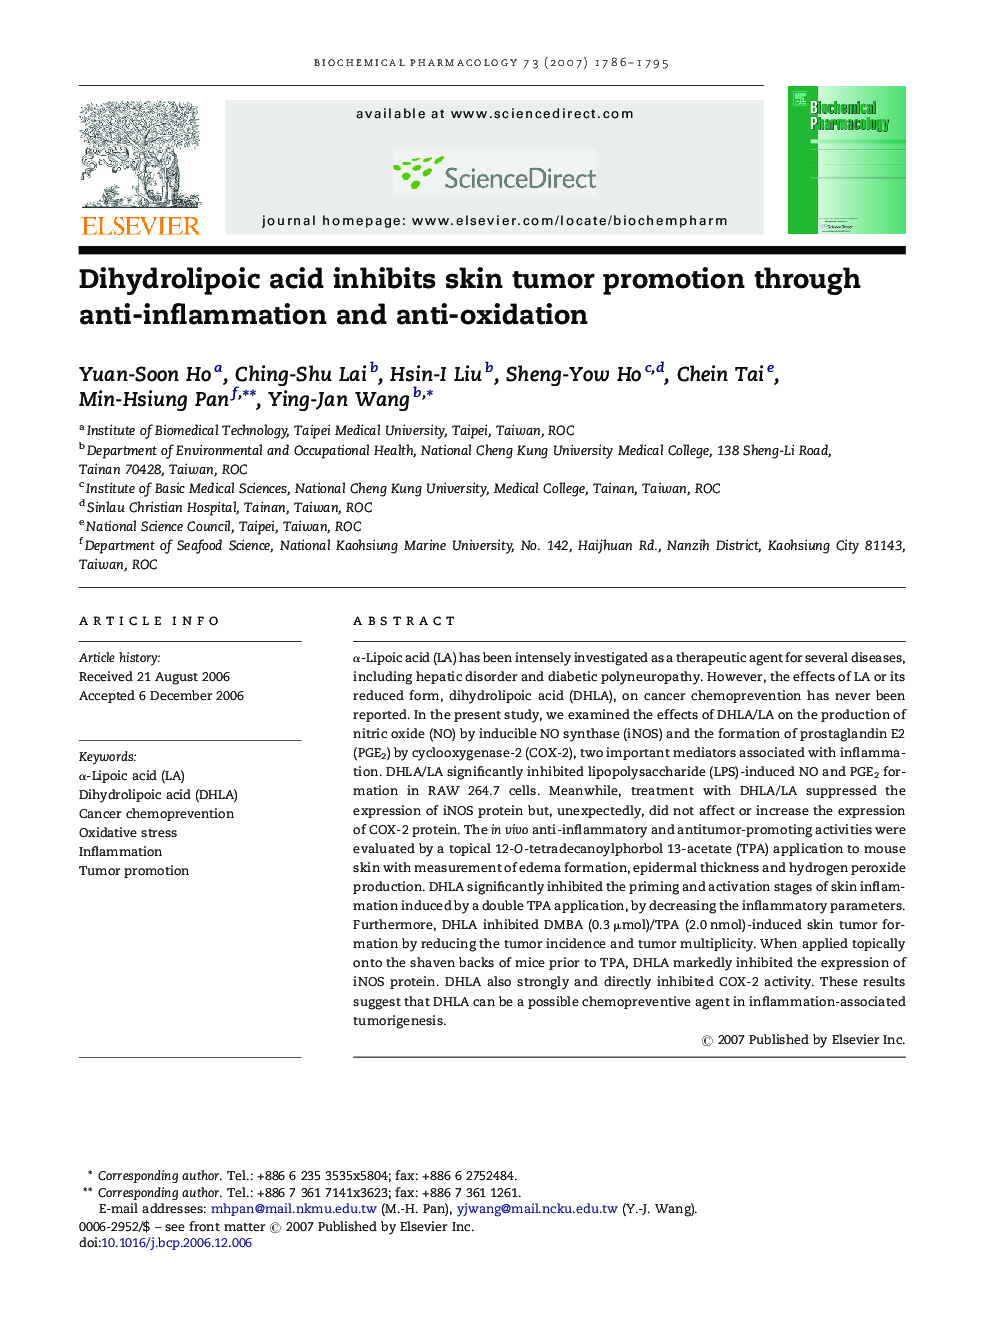 Dihydrolipoic acid inhibits skin tumor promotion through anti-inflammation and anti-oxidation